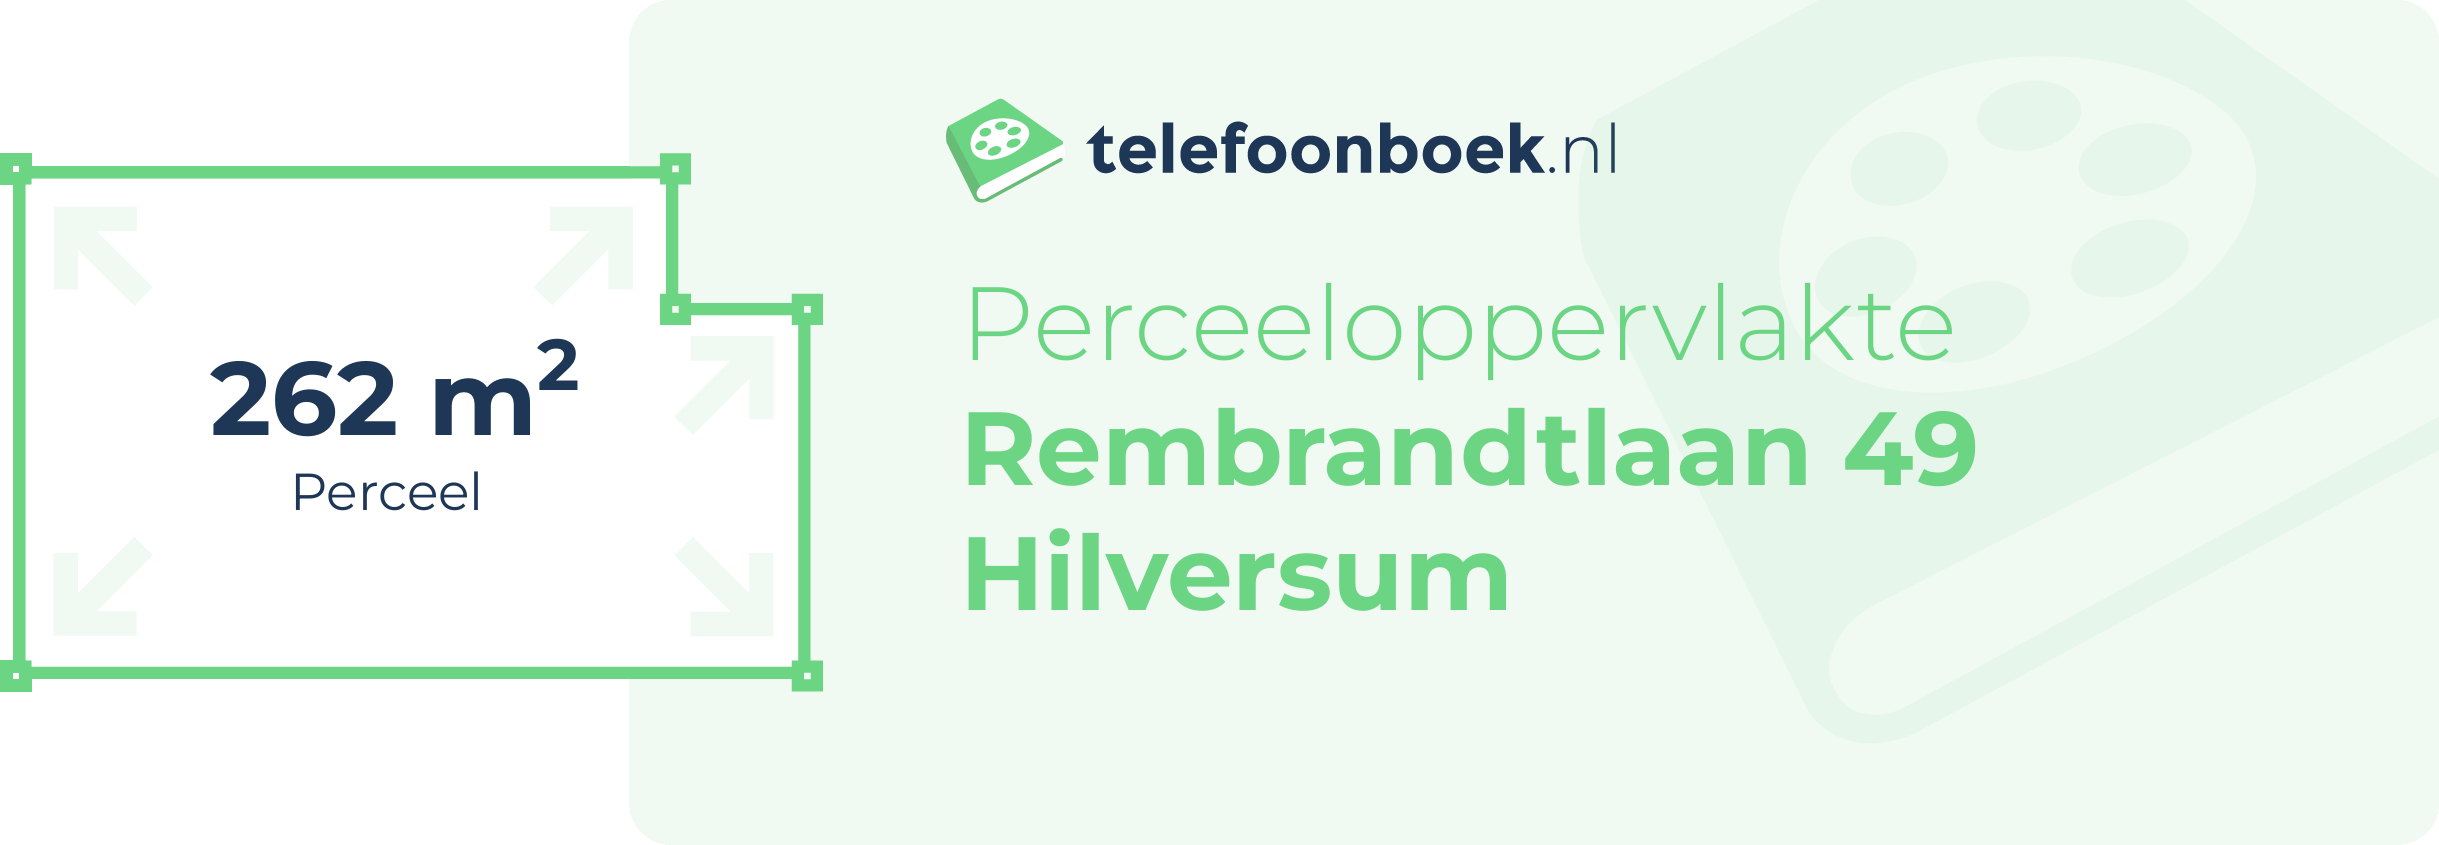 Perceeloppervlakte Rembrandtlaan 49 Hilversum